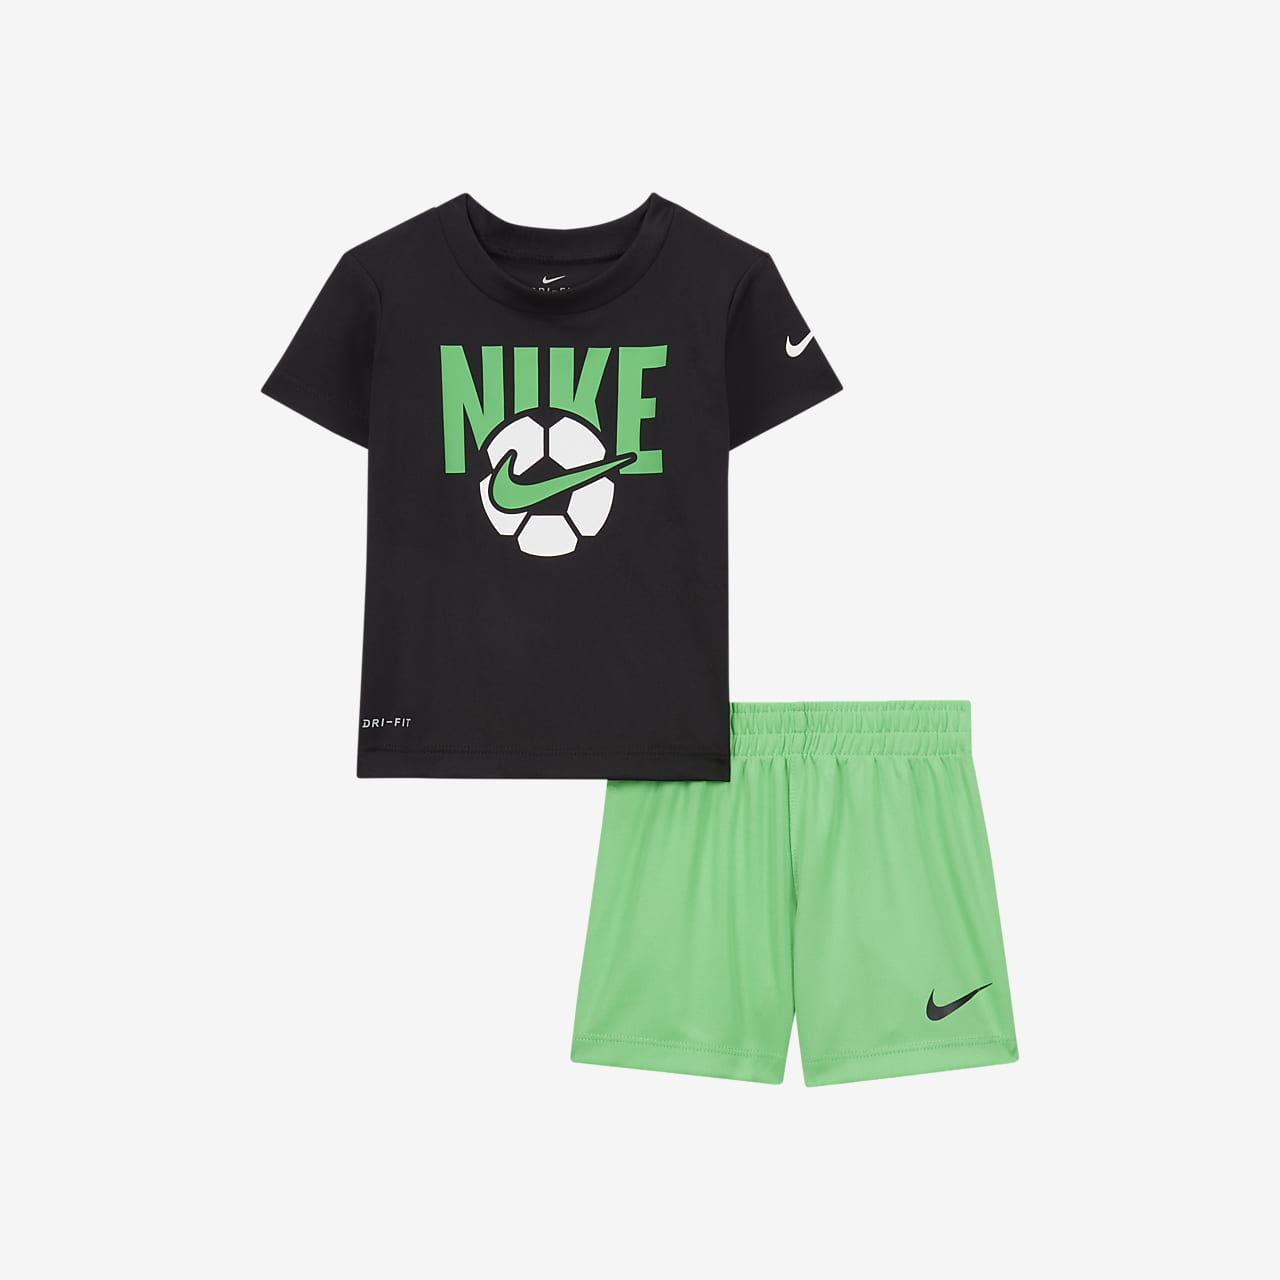 Nike Dri-FIT Baby (12-24M) Set. Shorts and T-Shirt